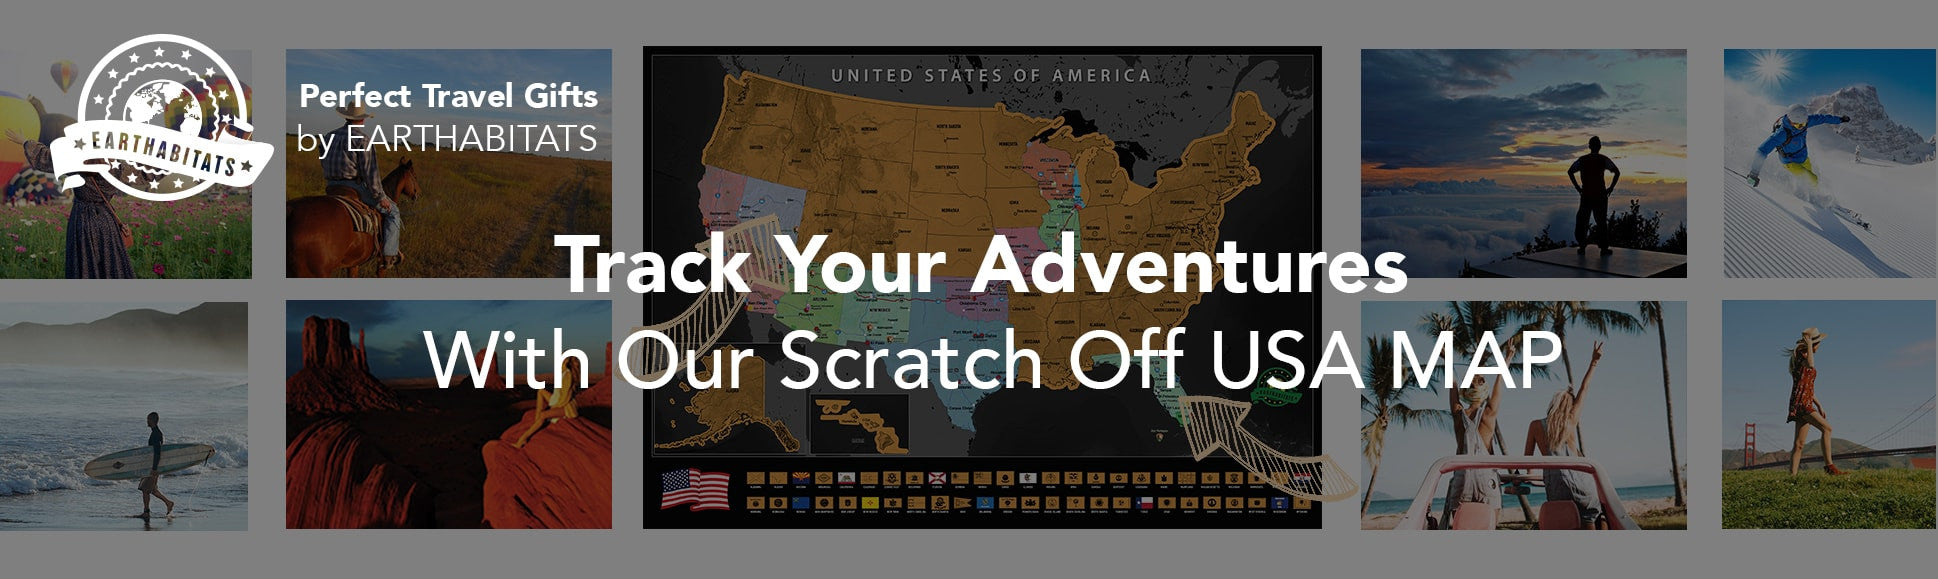 Earthabitats Scratch Off USA Map Poster Hero, Scratchable USA Map